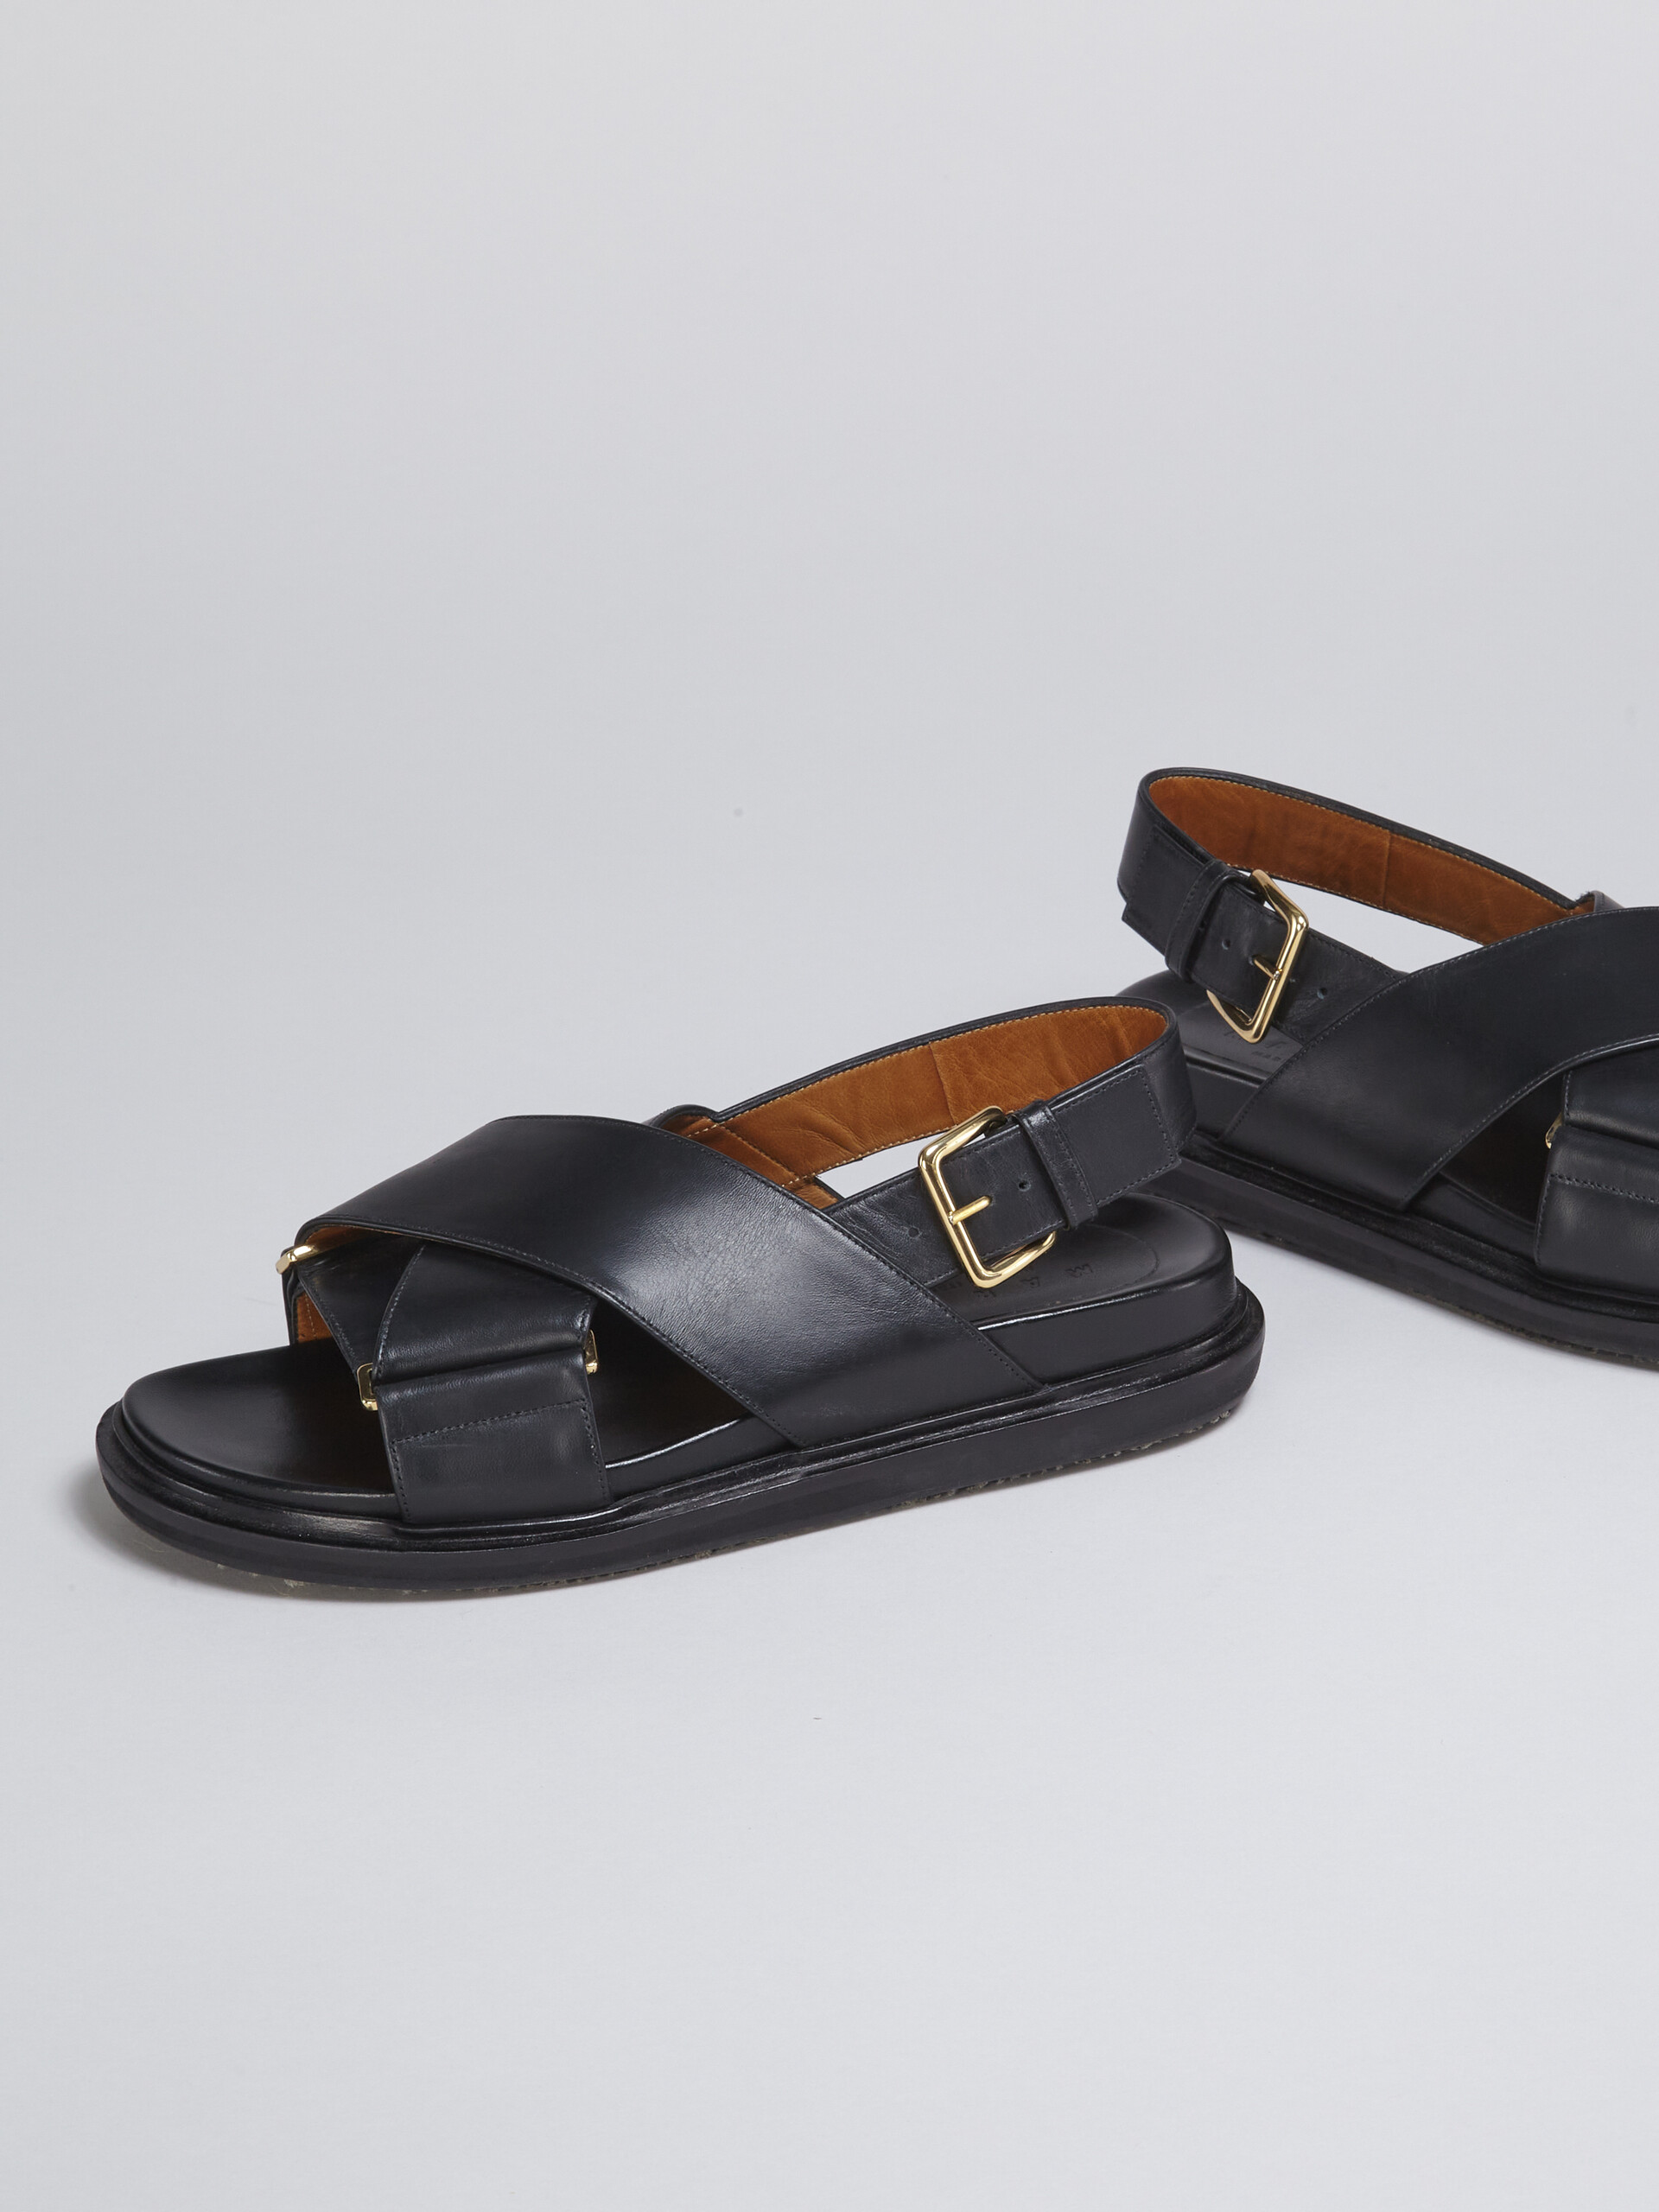 Black leather Fussbett - Sandals - Image 5